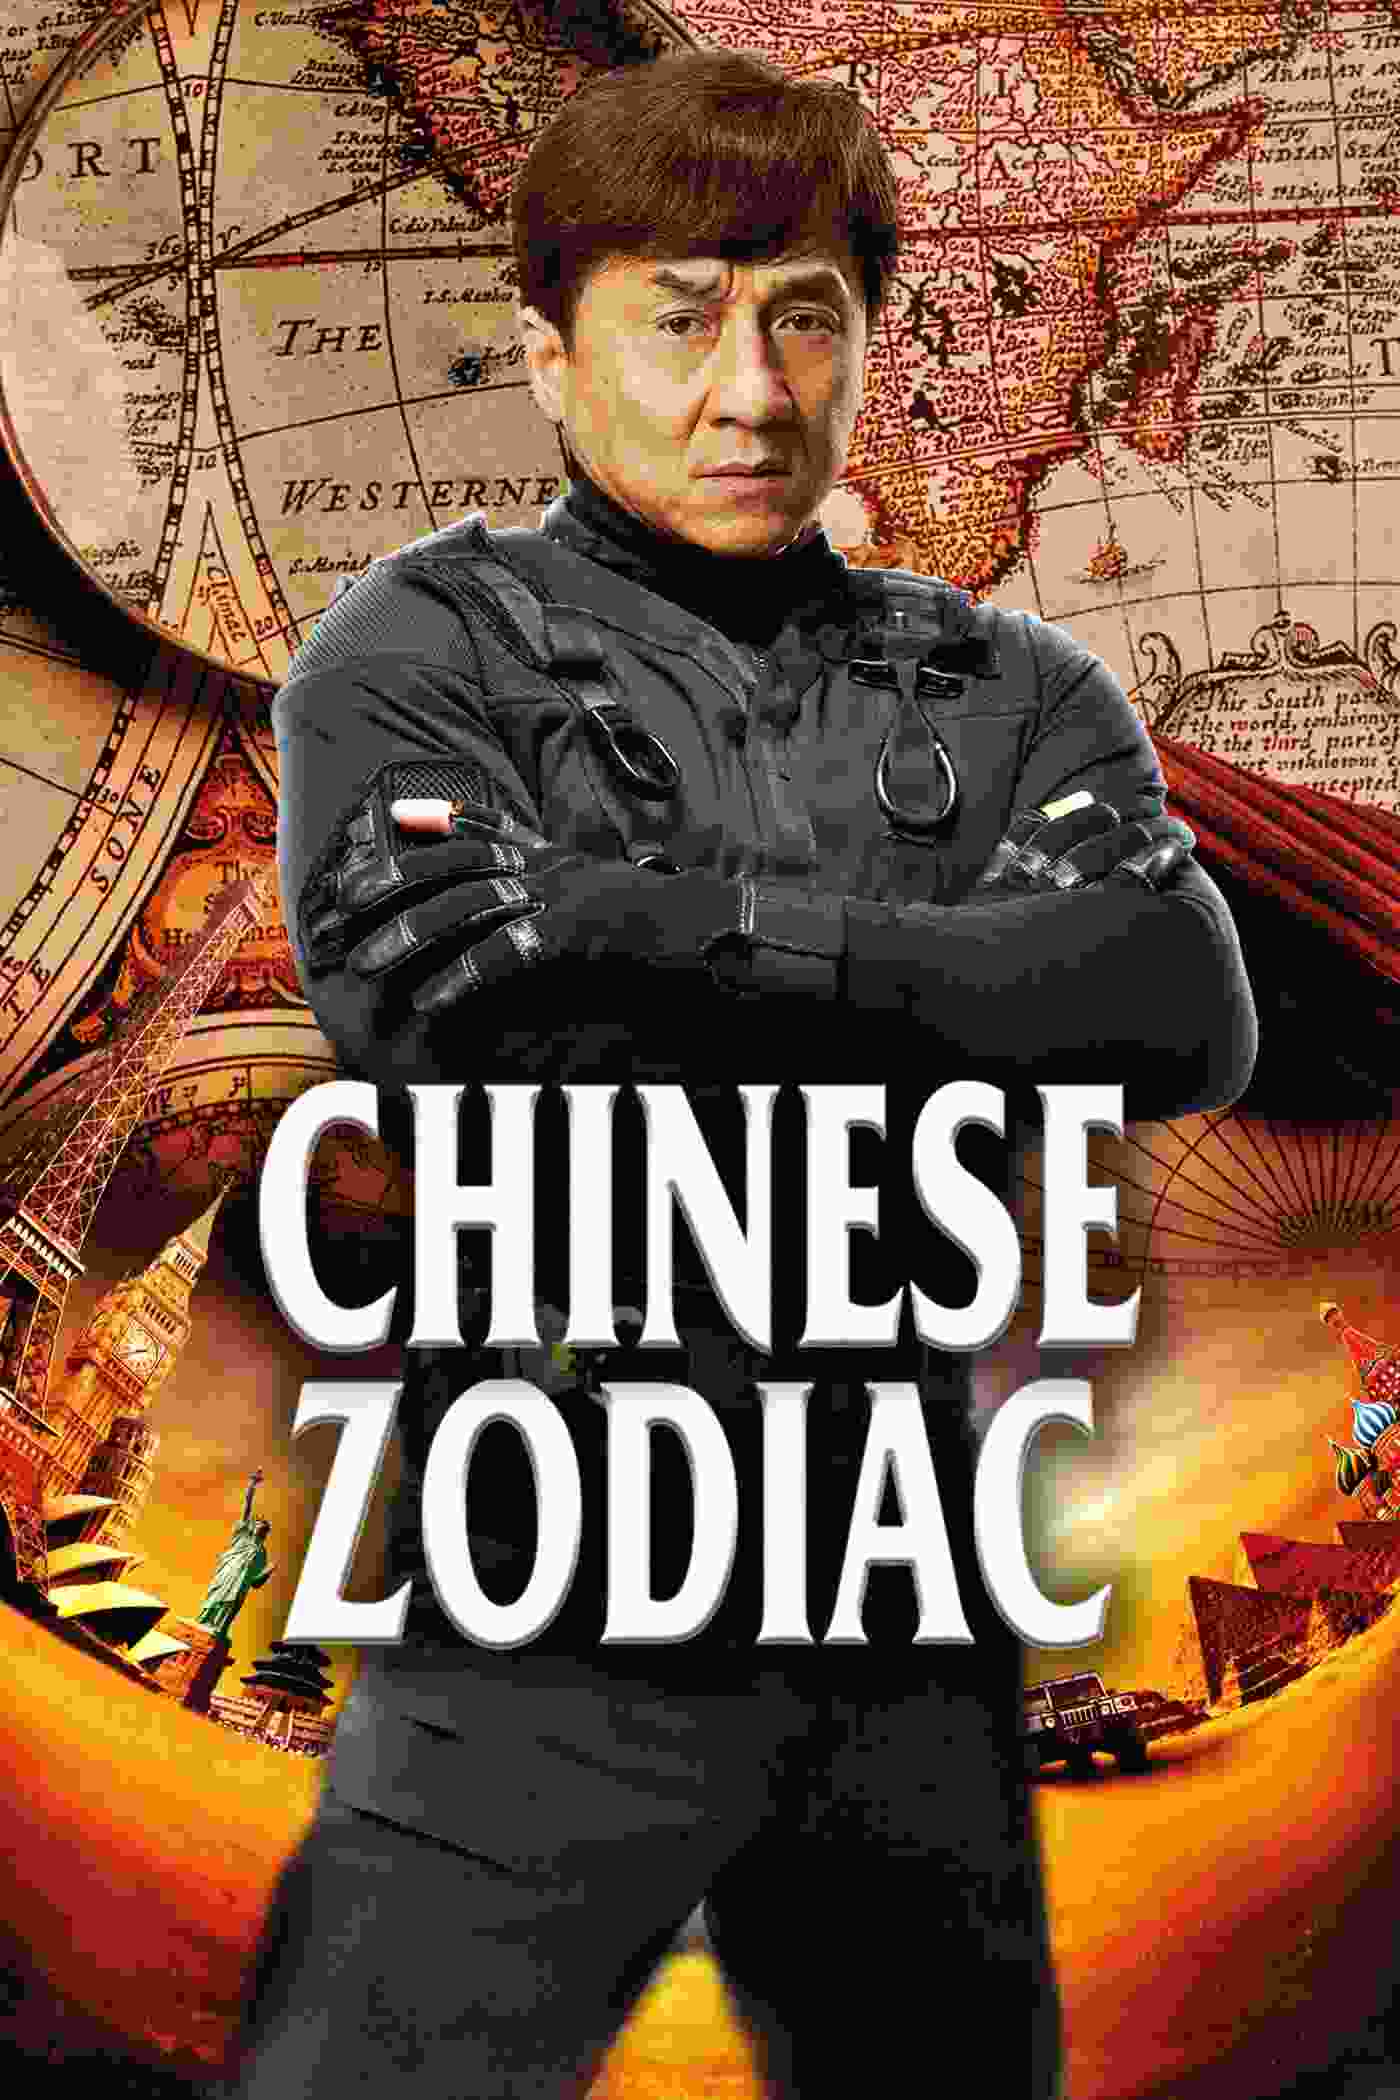 Chinese Zodiac (2012) Jackie Chan